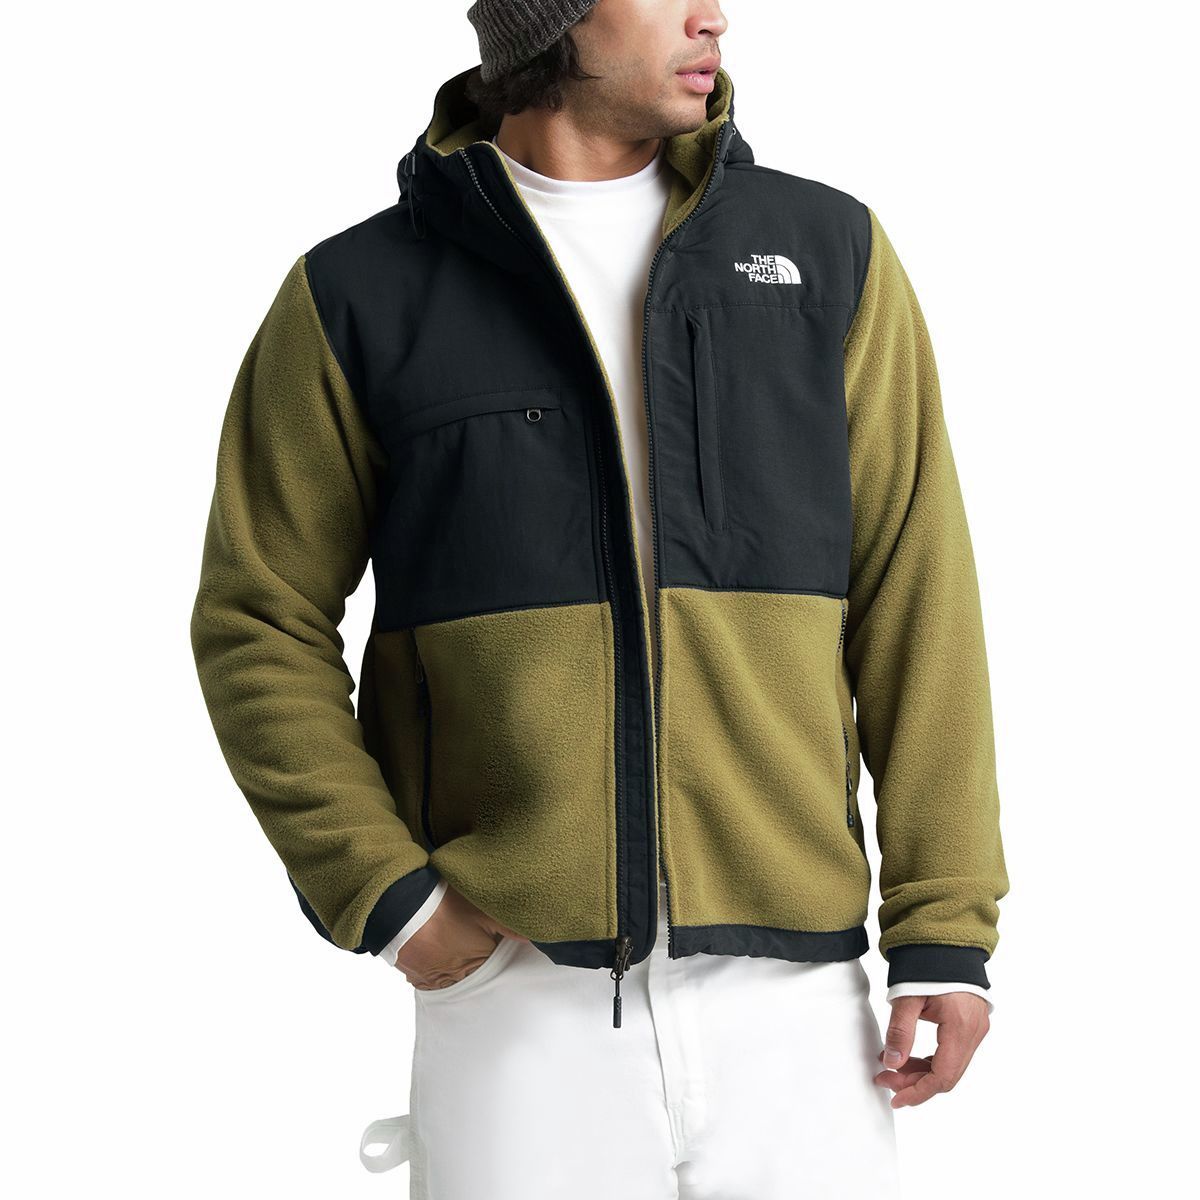 The North Face Denali 2 Hooded Fleece Jacket - Men's | Backcountry.com